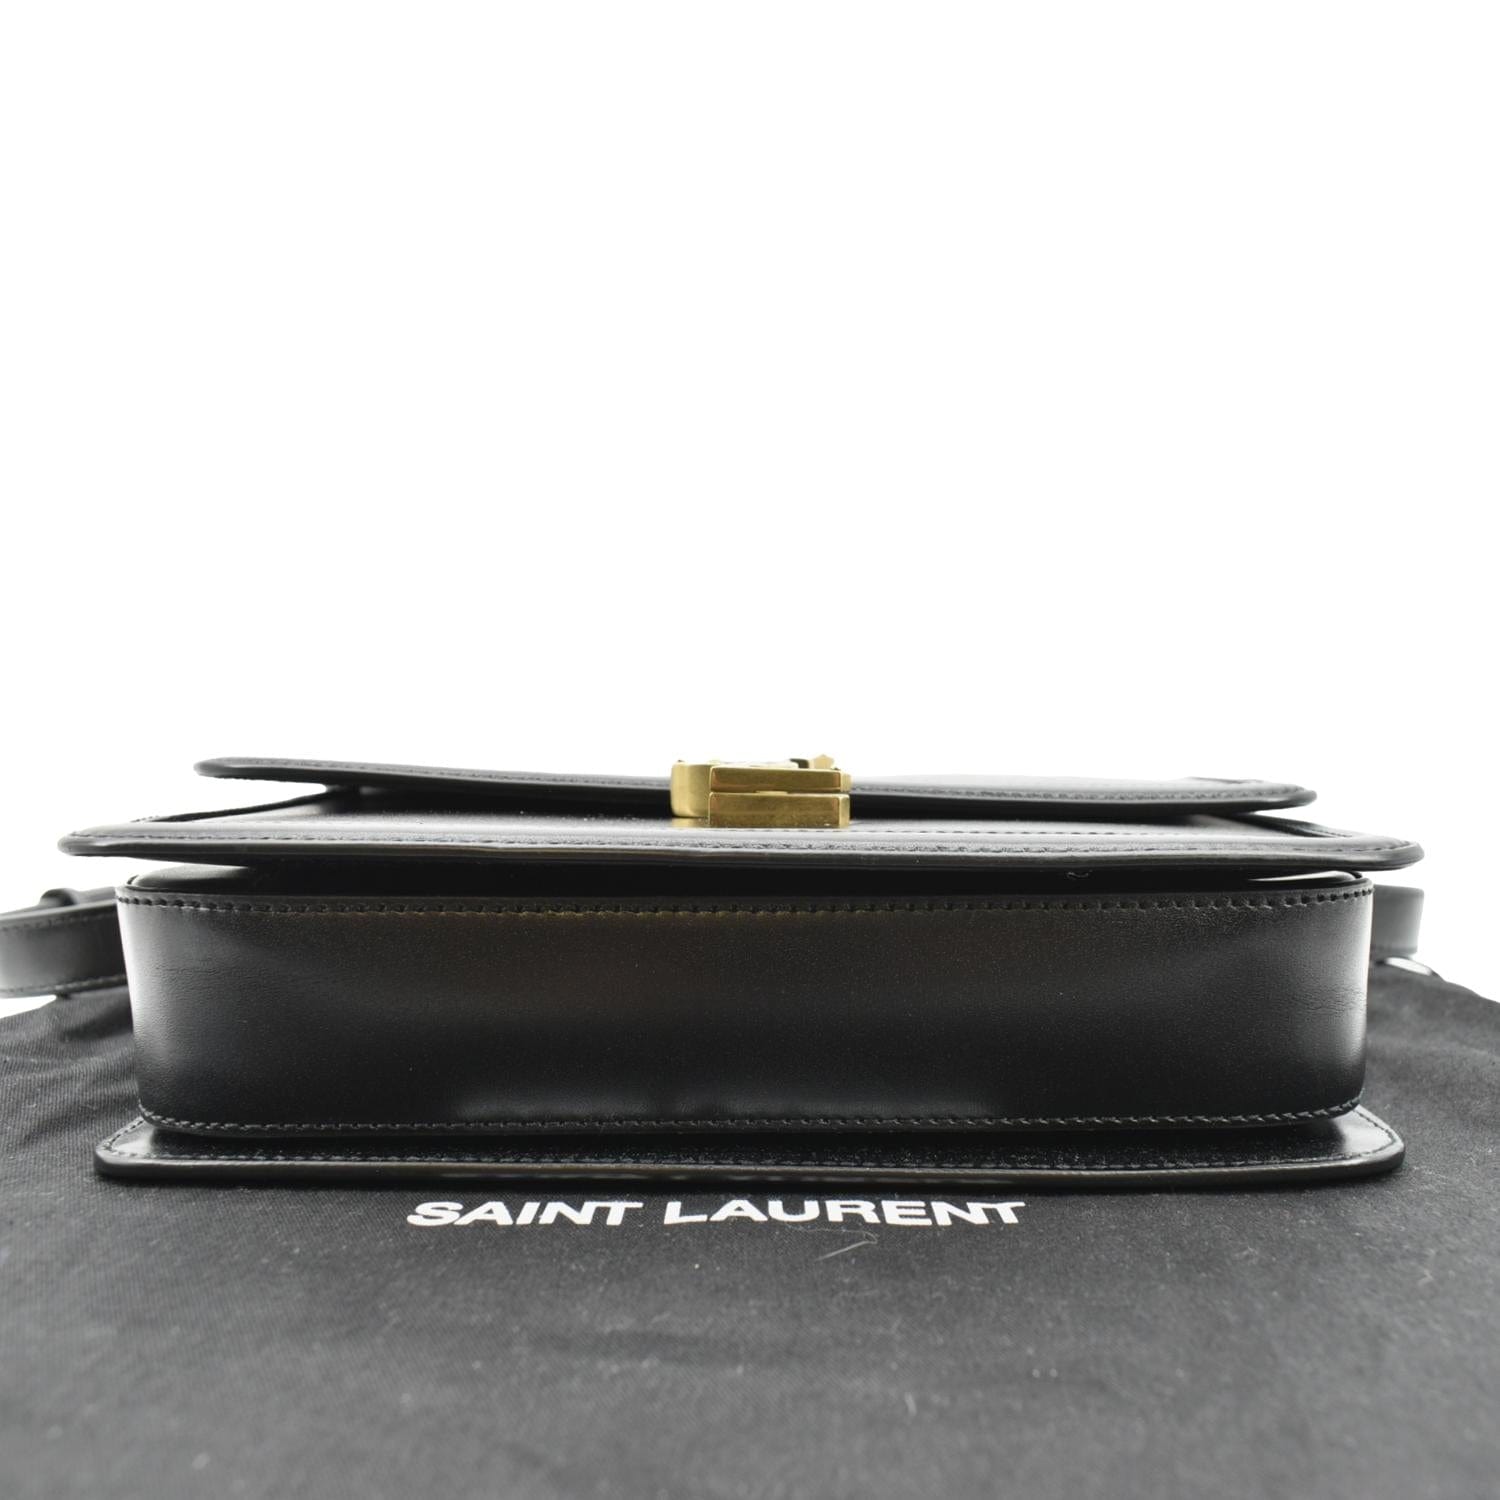 Yves Saint Laurent Solferino Medium Leather Shoulder Bag Black